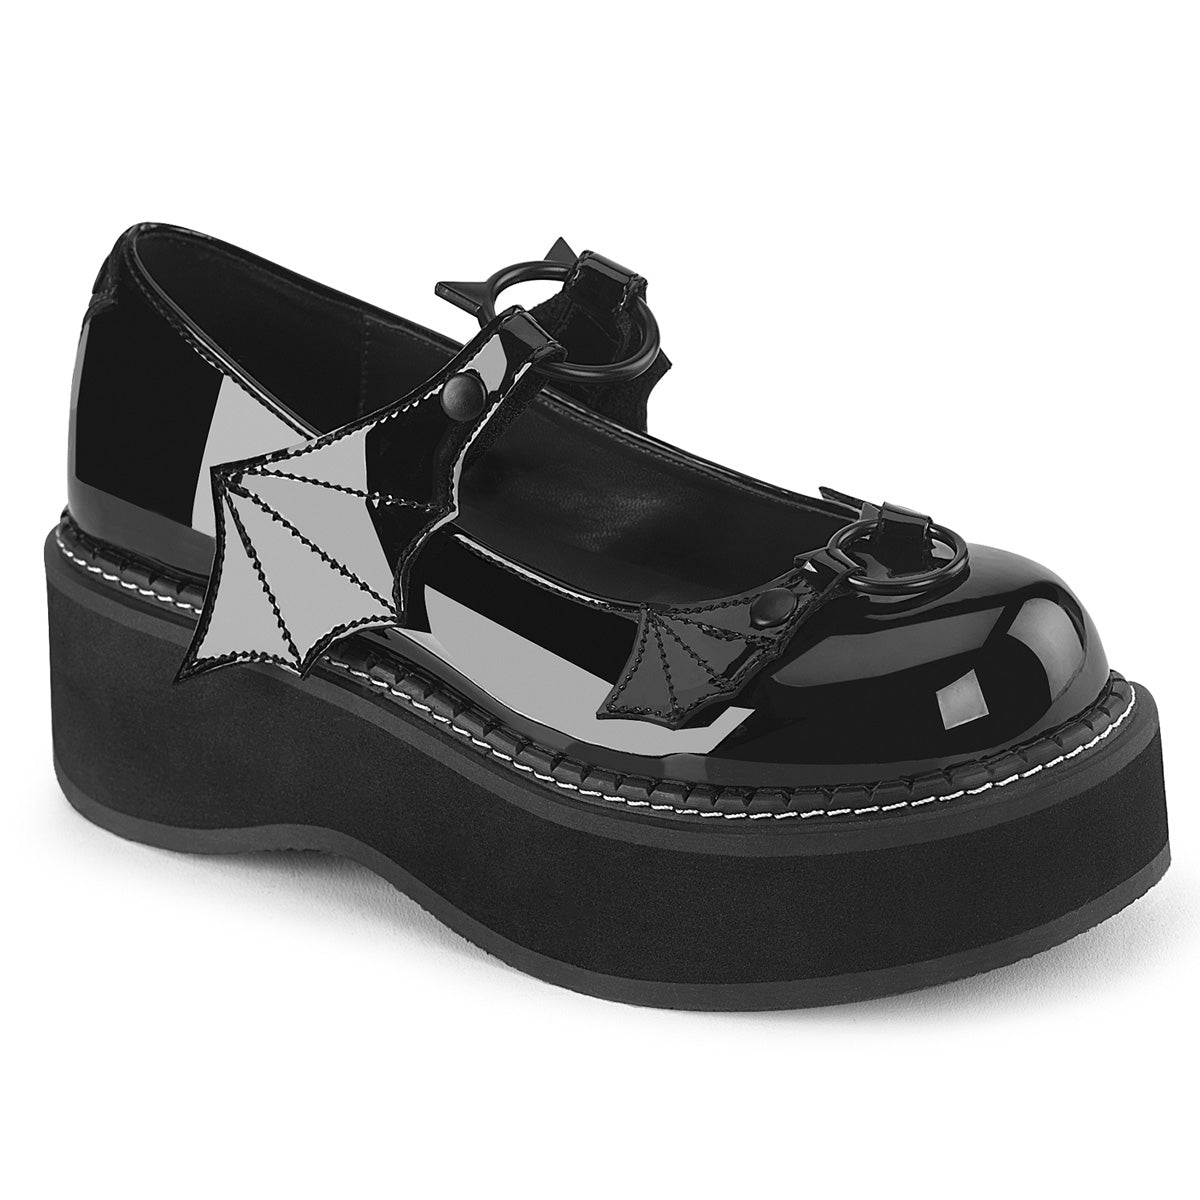 EMILY-23 Batwing Maryjane Shoes by Demonia